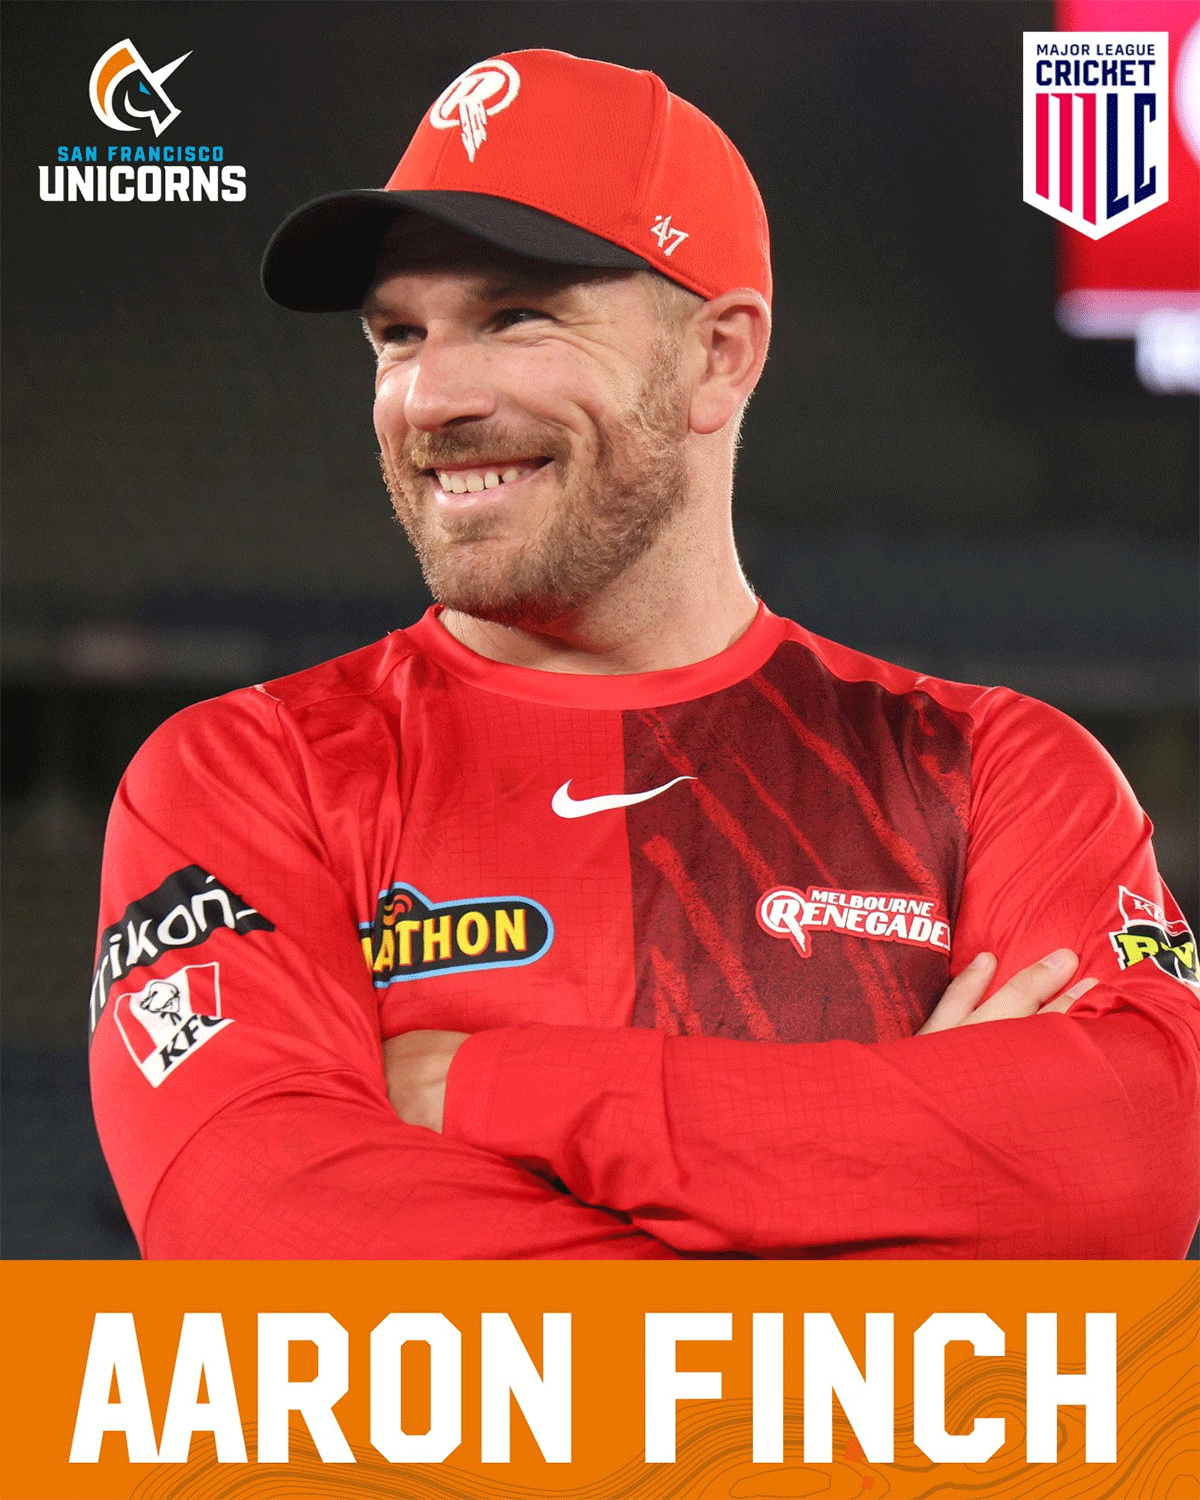 Former Australia skipper Aaron Finch will captain the San Francisco Unicorns in the inaugural edition of the United States' new Twenty20 tournament, Major League Cricket.